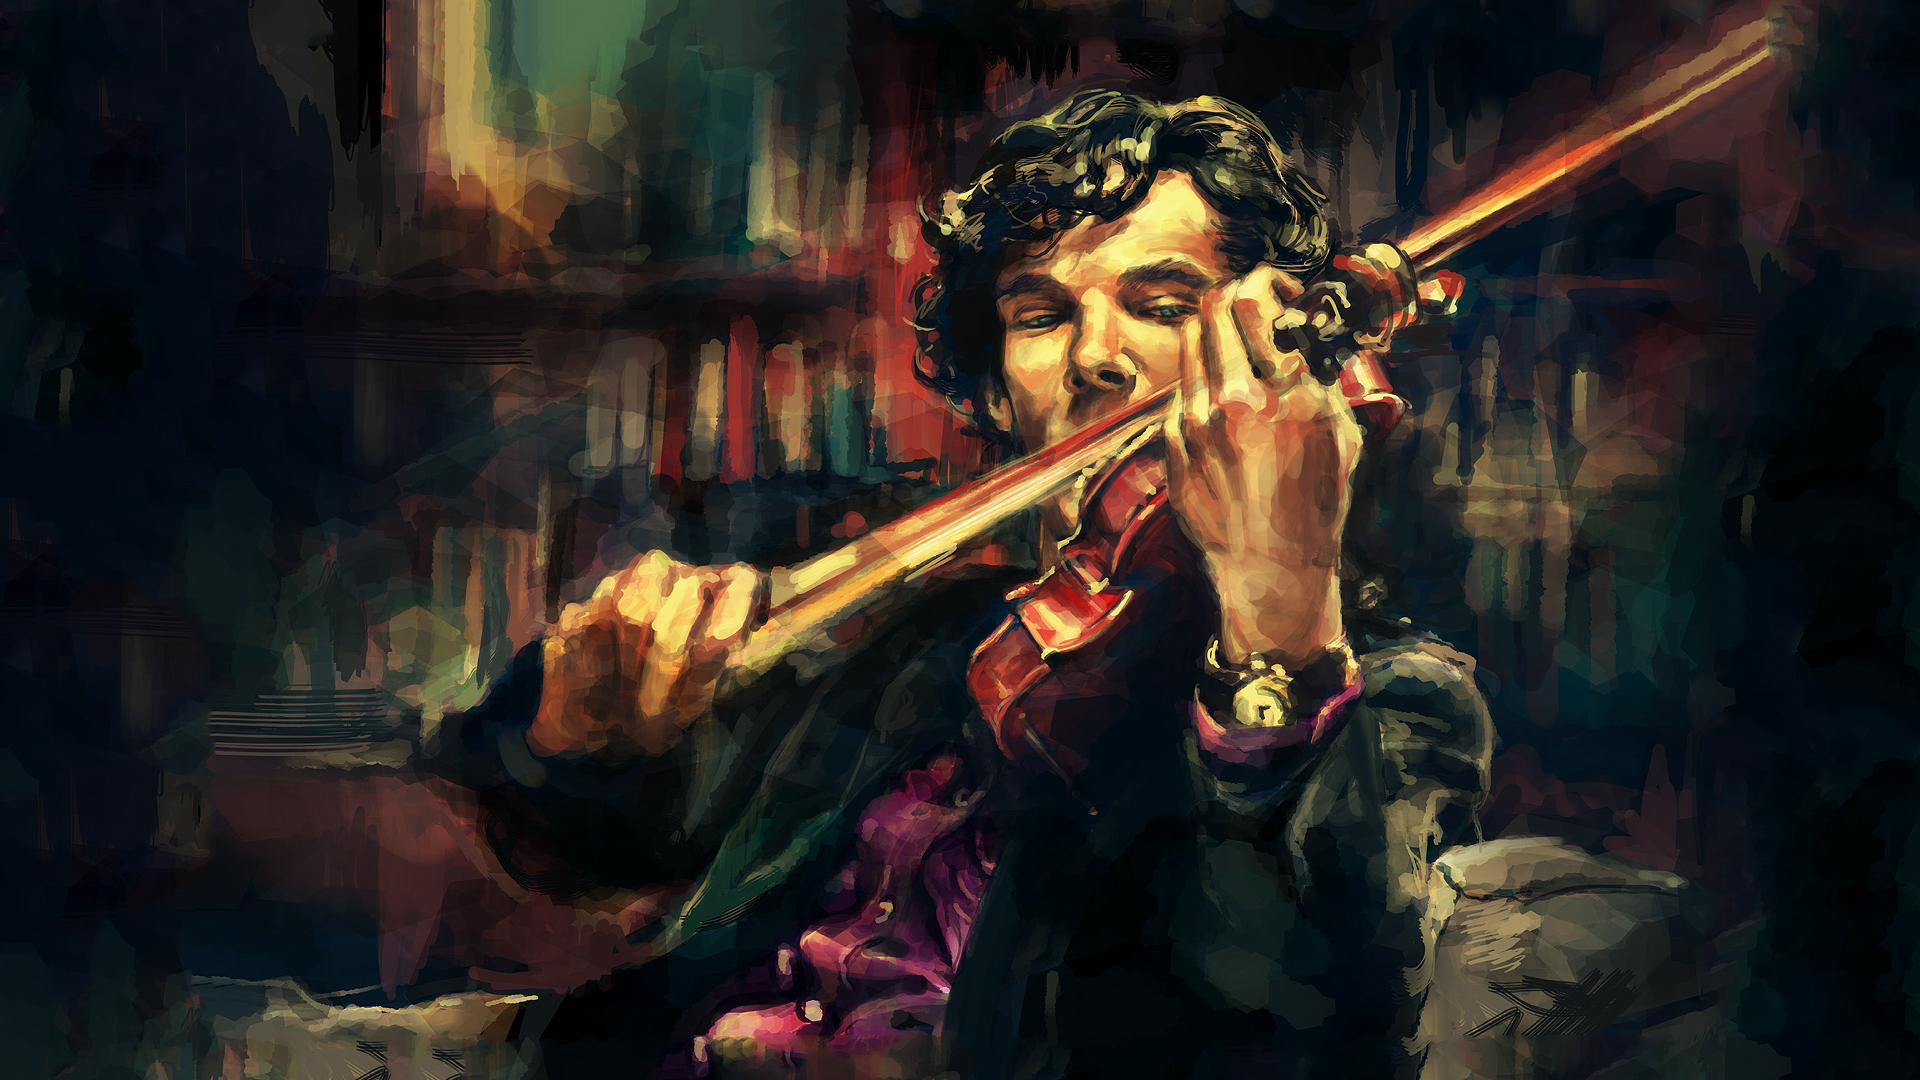 General 1920x1080 alicexz Sherlock Benedict Cumberbatch actor artwork violin musical instrument TV series DeviantArt